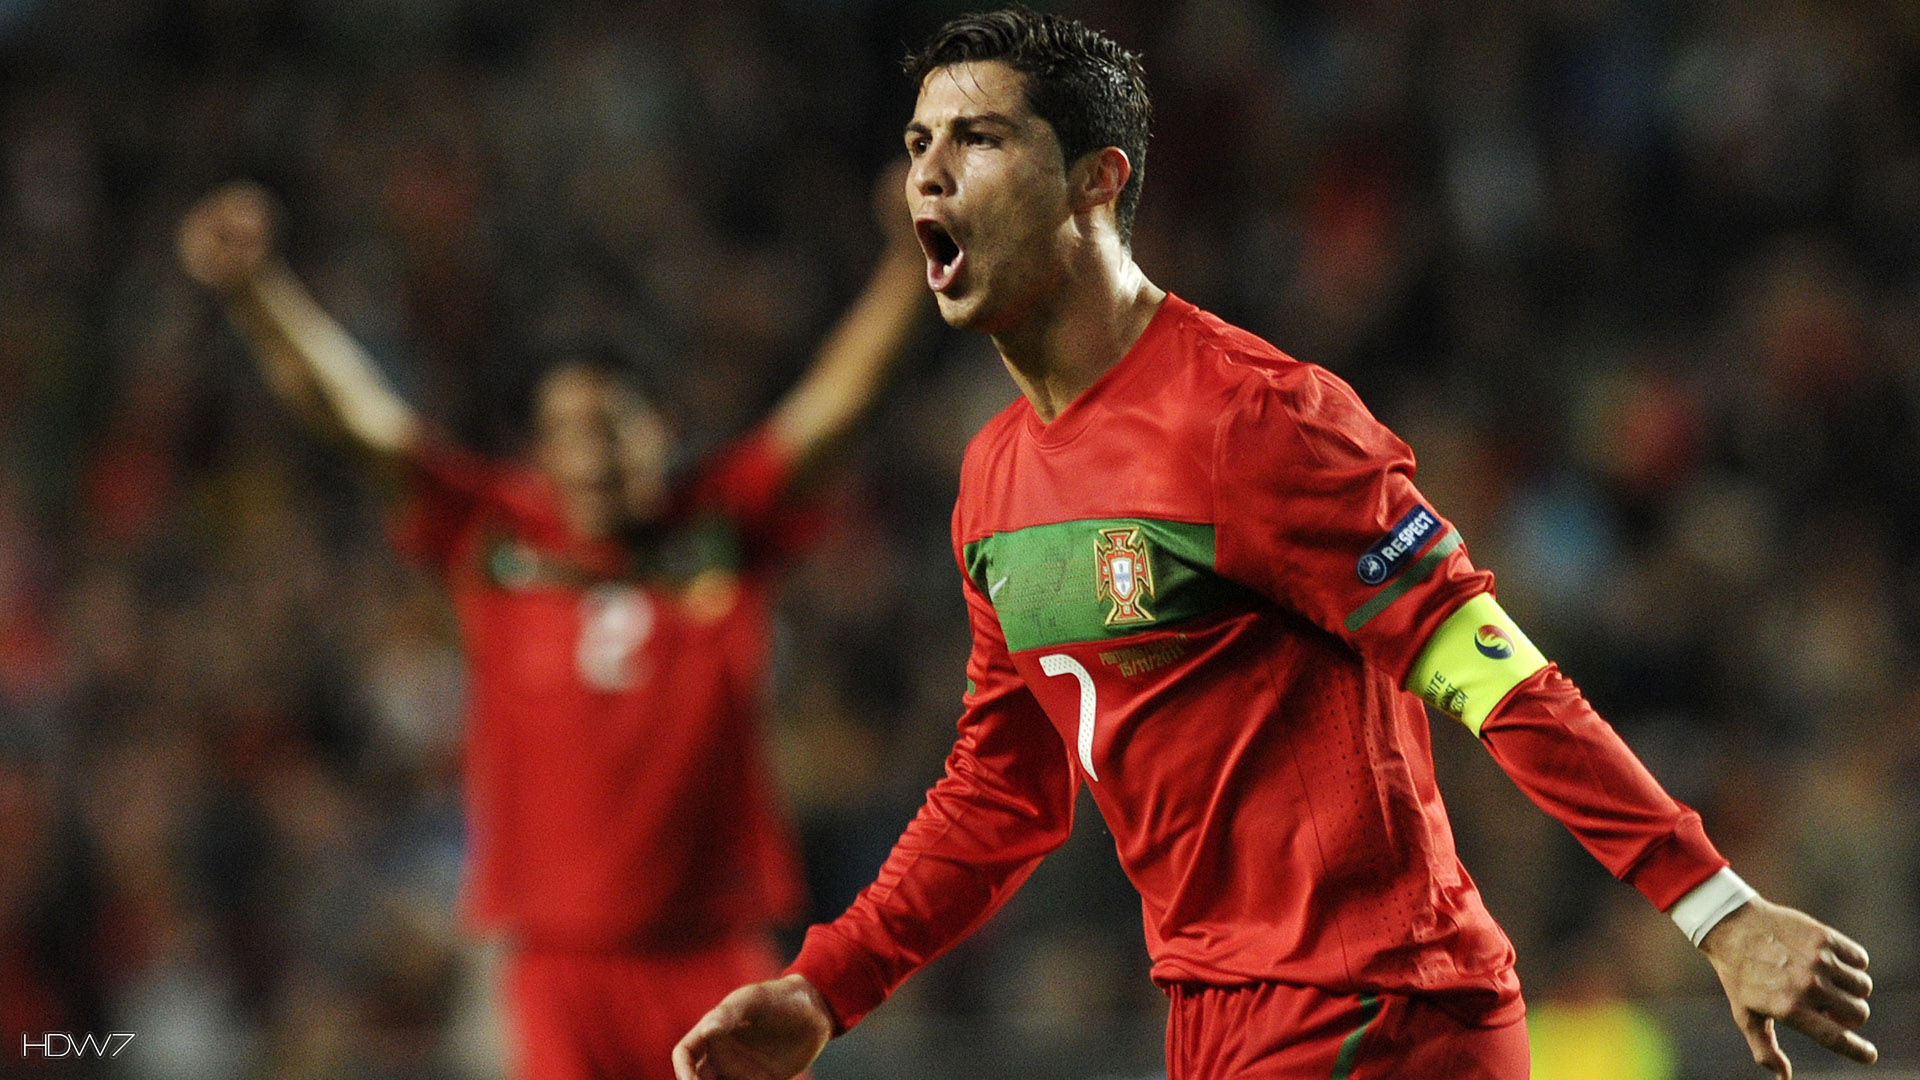 Wallpaper Name Cristiano Ronaldo Portugal Jpg Added May